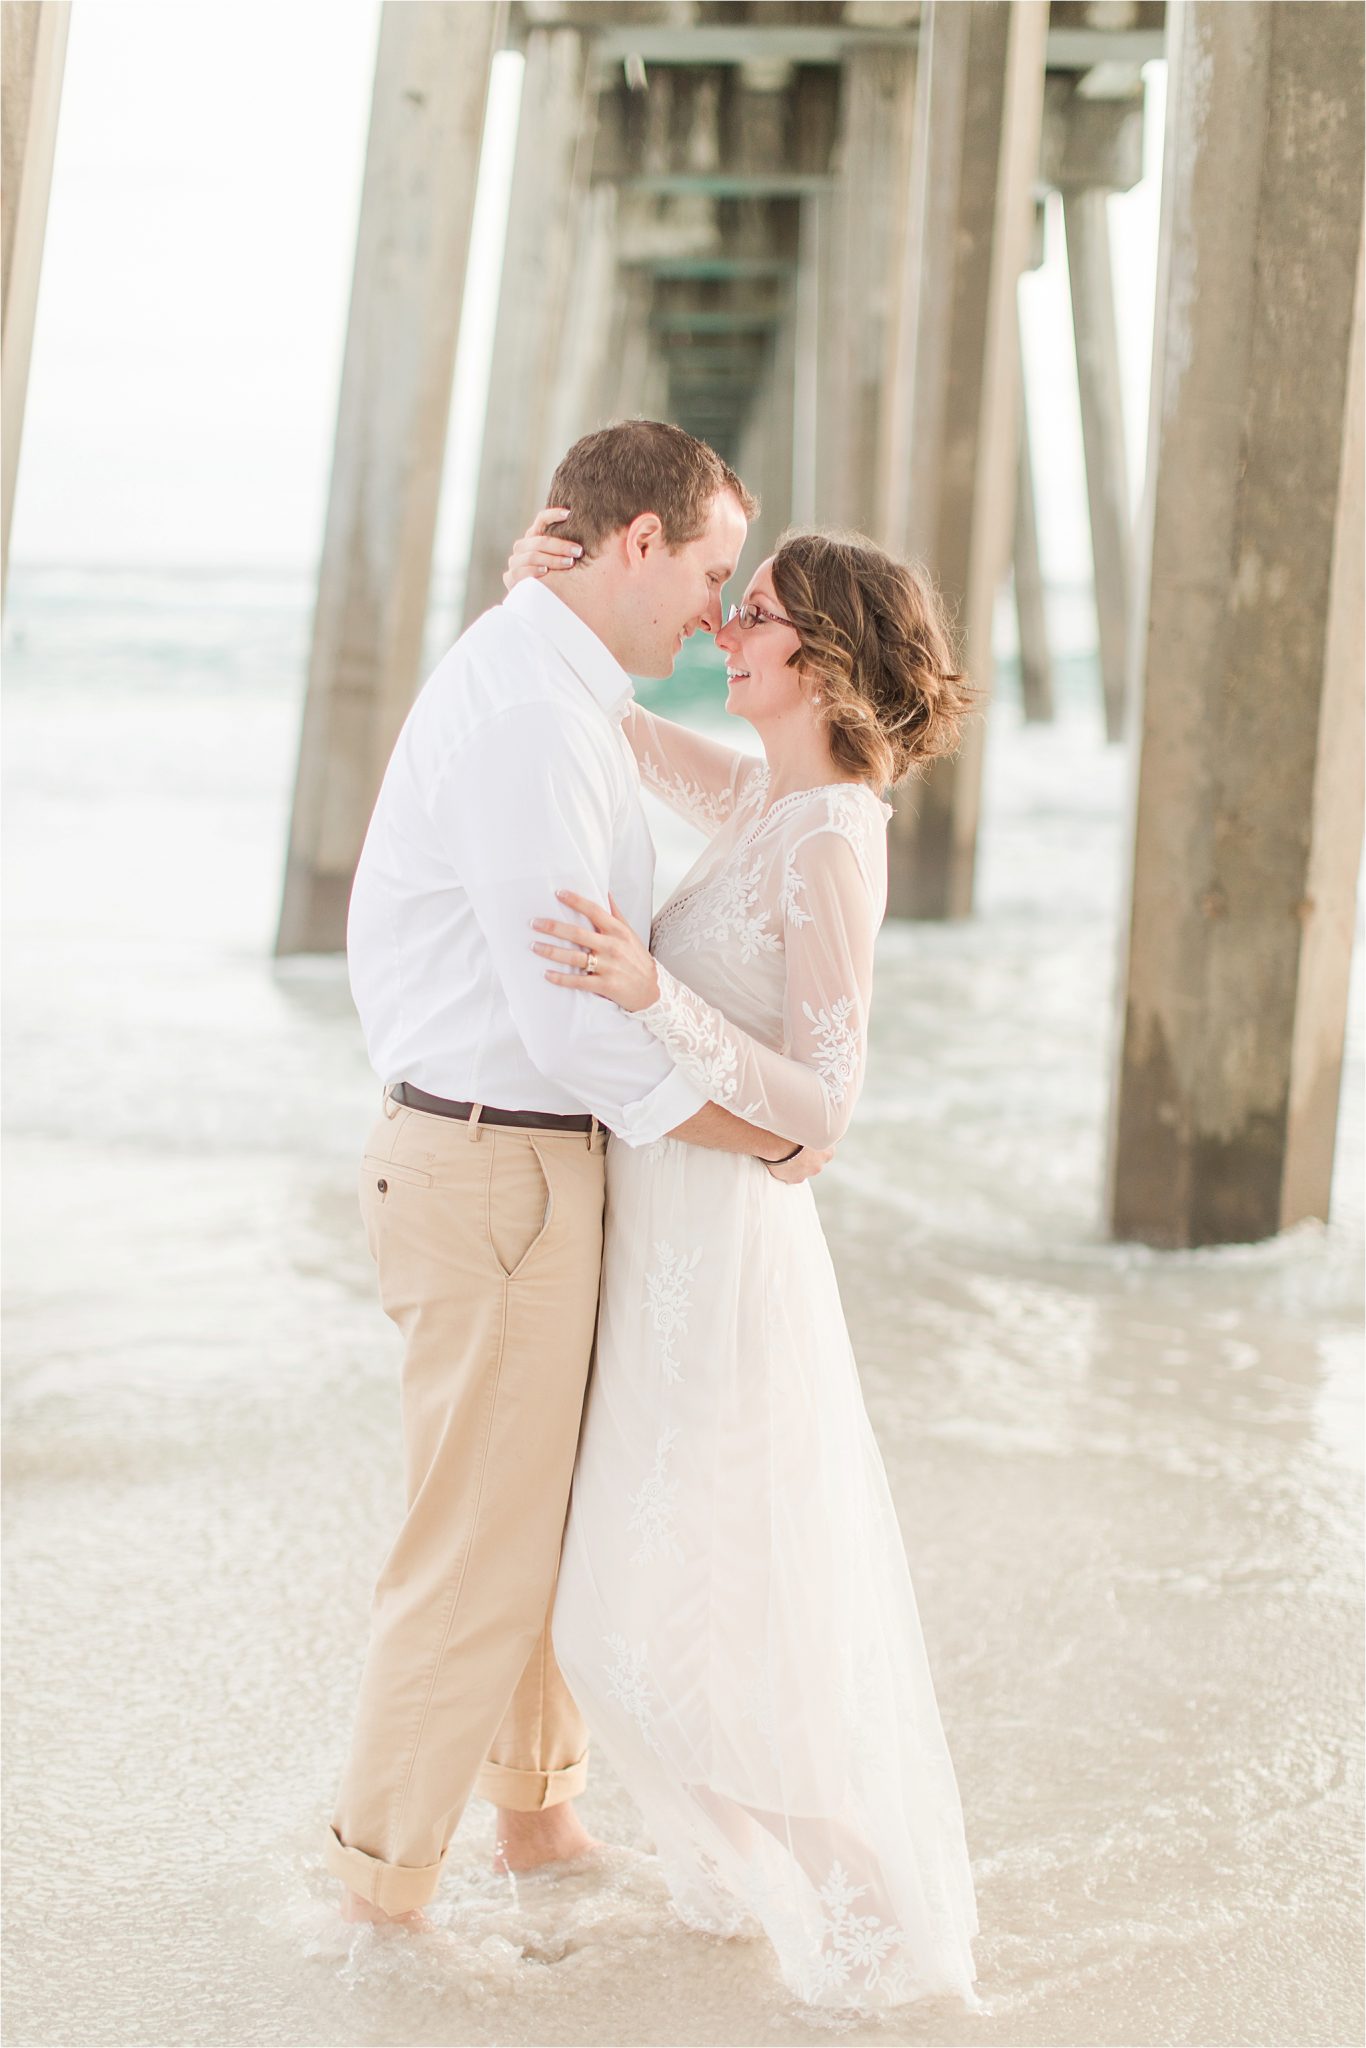 Romantic Pensacola Beach Photos at Sunset-Neil + Steph-Engagement Shoot Inspiration-Beach engagement shoot